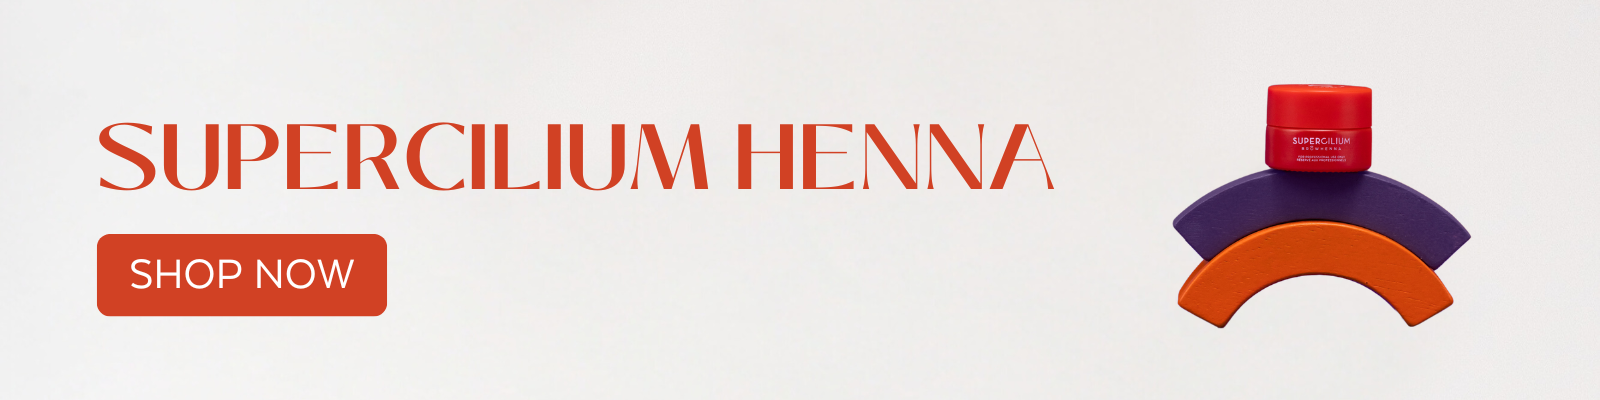 Supercilium Brow Henna Collection